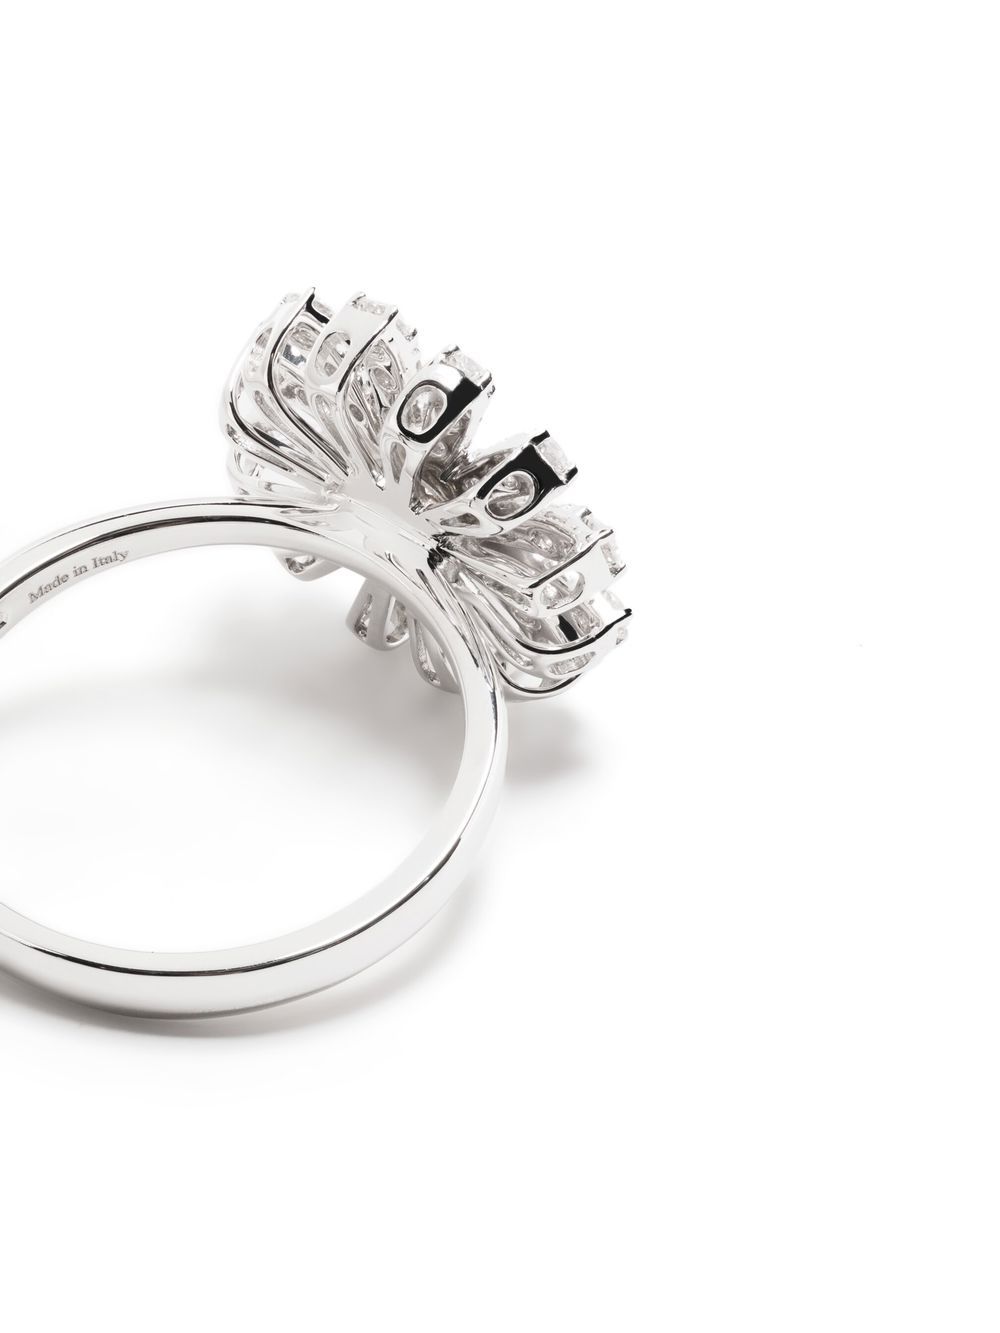 Louis Vuitton White Gold and Diamond Blason Ring, Cocktail Ring, Size 4 1/2, Vintage Jewelry